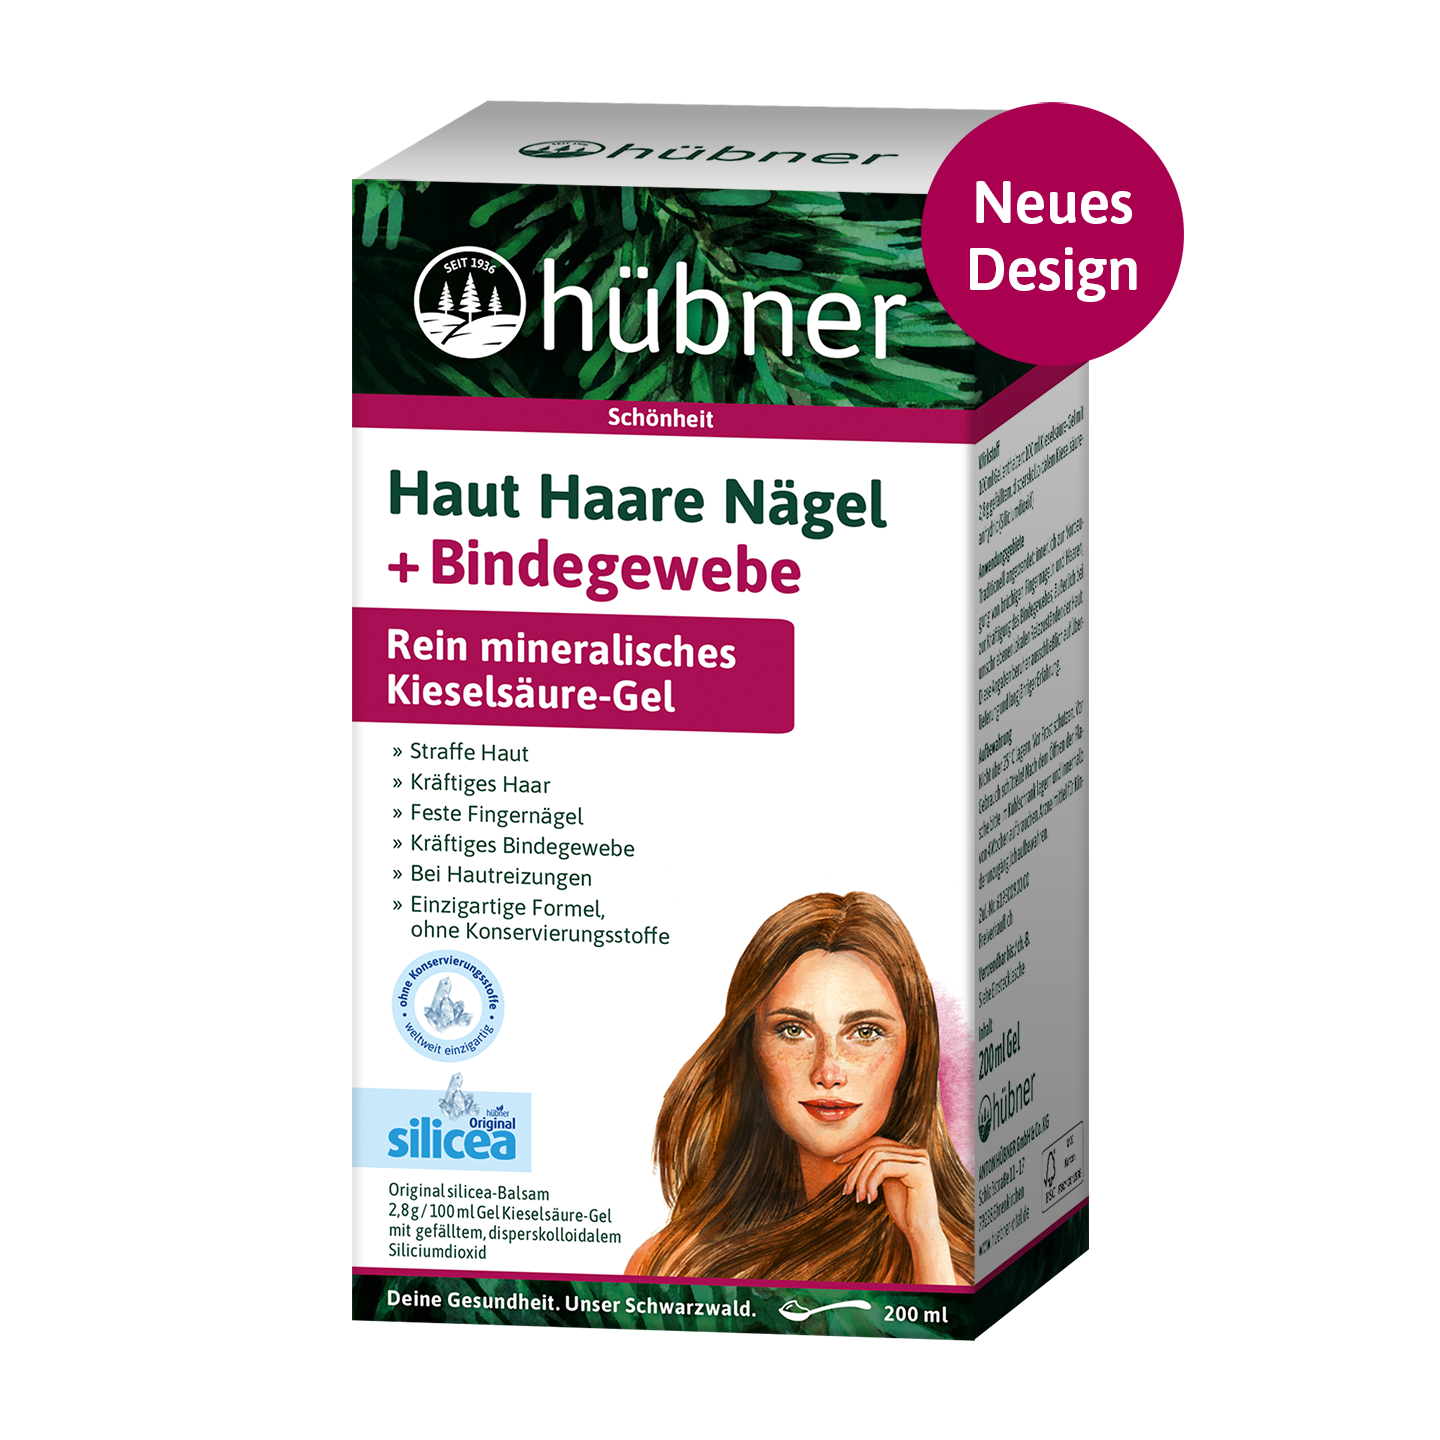  hübner® Haut Haare Nägel + Bindegewebe